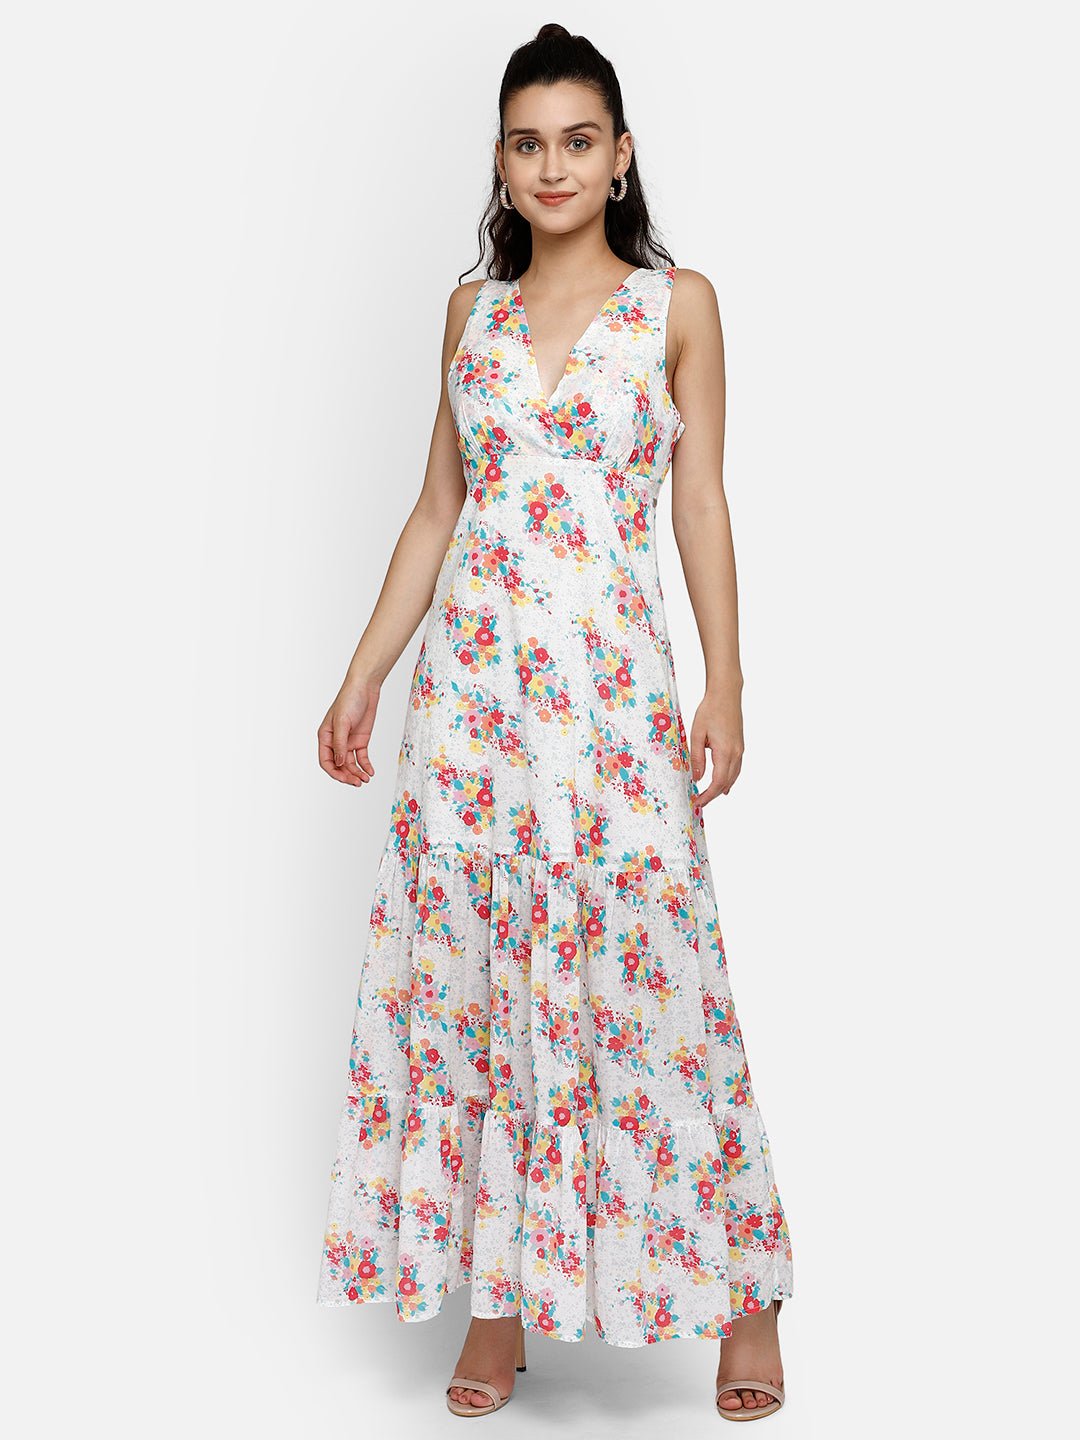 White floral print maxi dress - Aditi Wasan